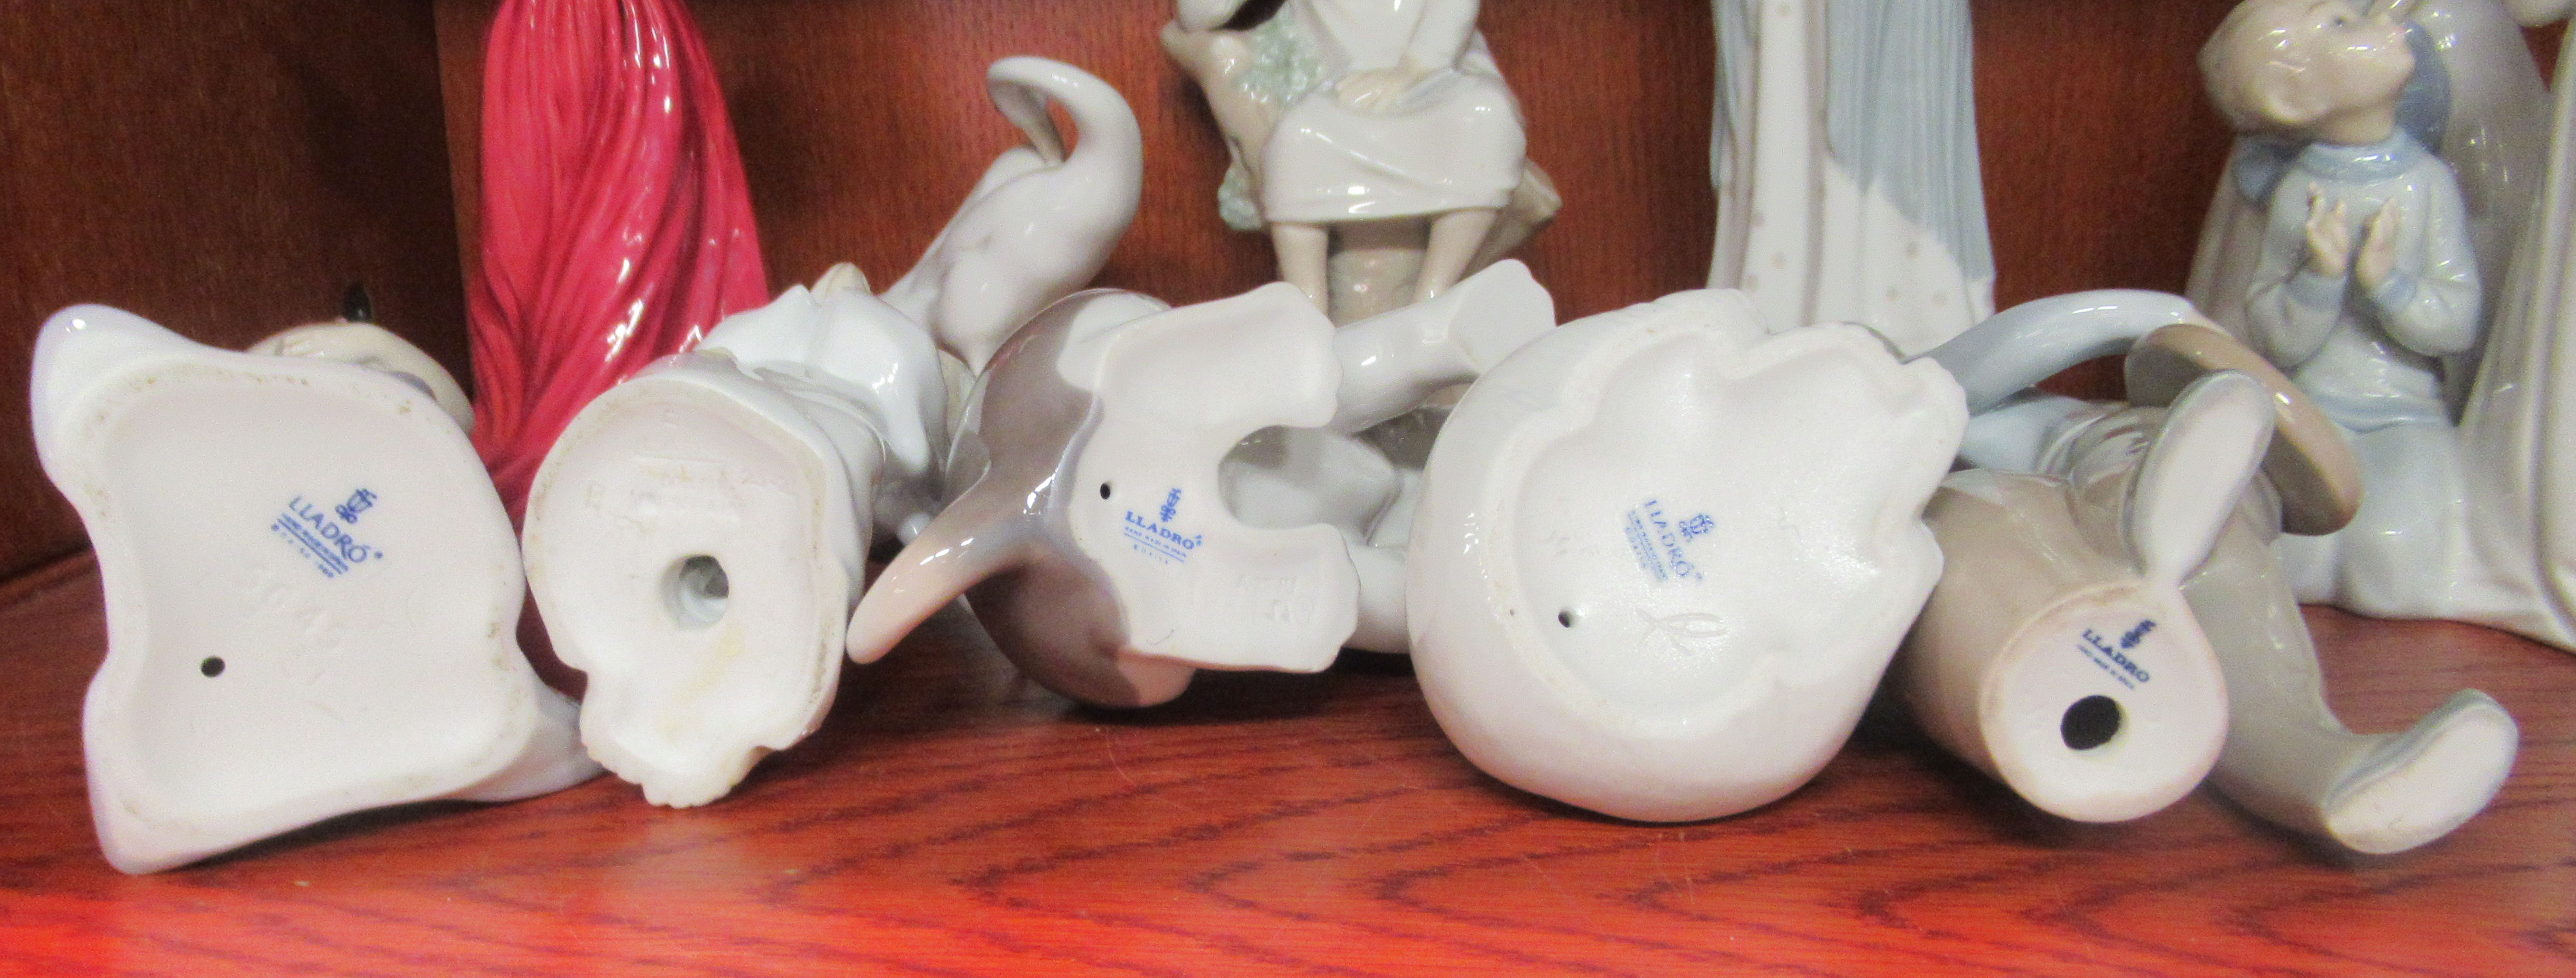 Decorative ceramics: to include Lladro porcelain model animals  largest 4.5"h - Image 6 of 12